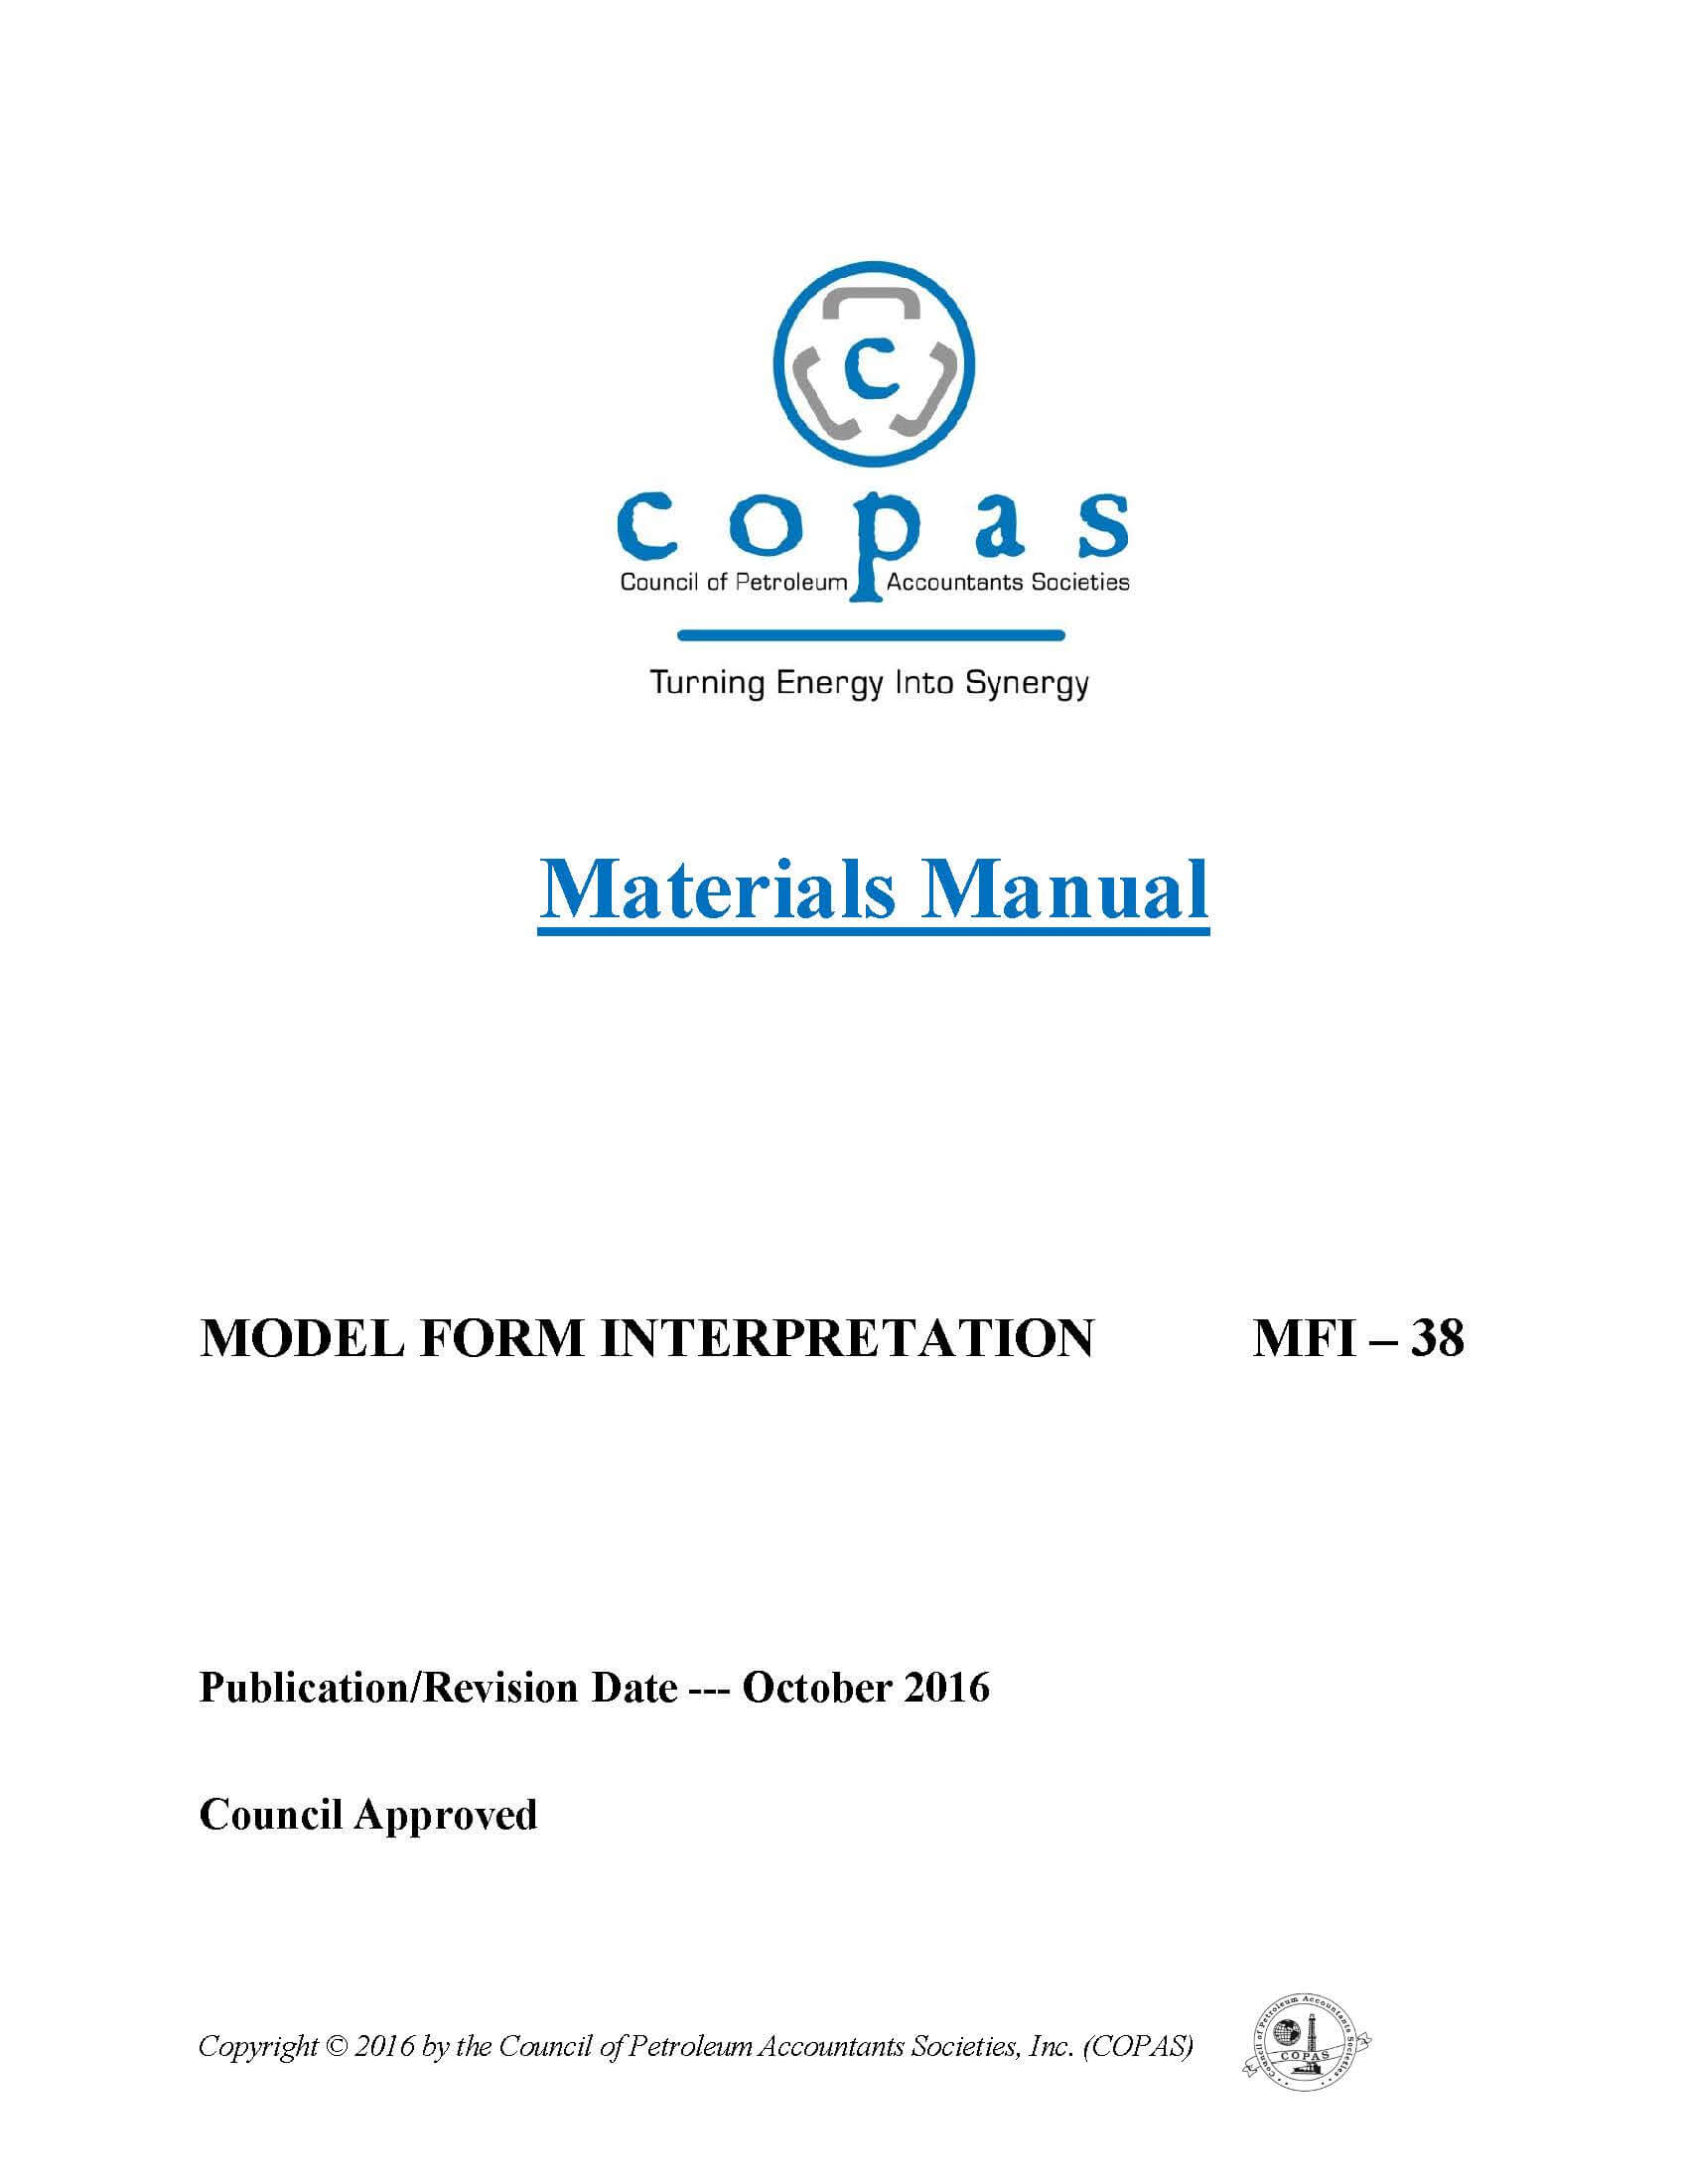 MFI-38 Materials Manual